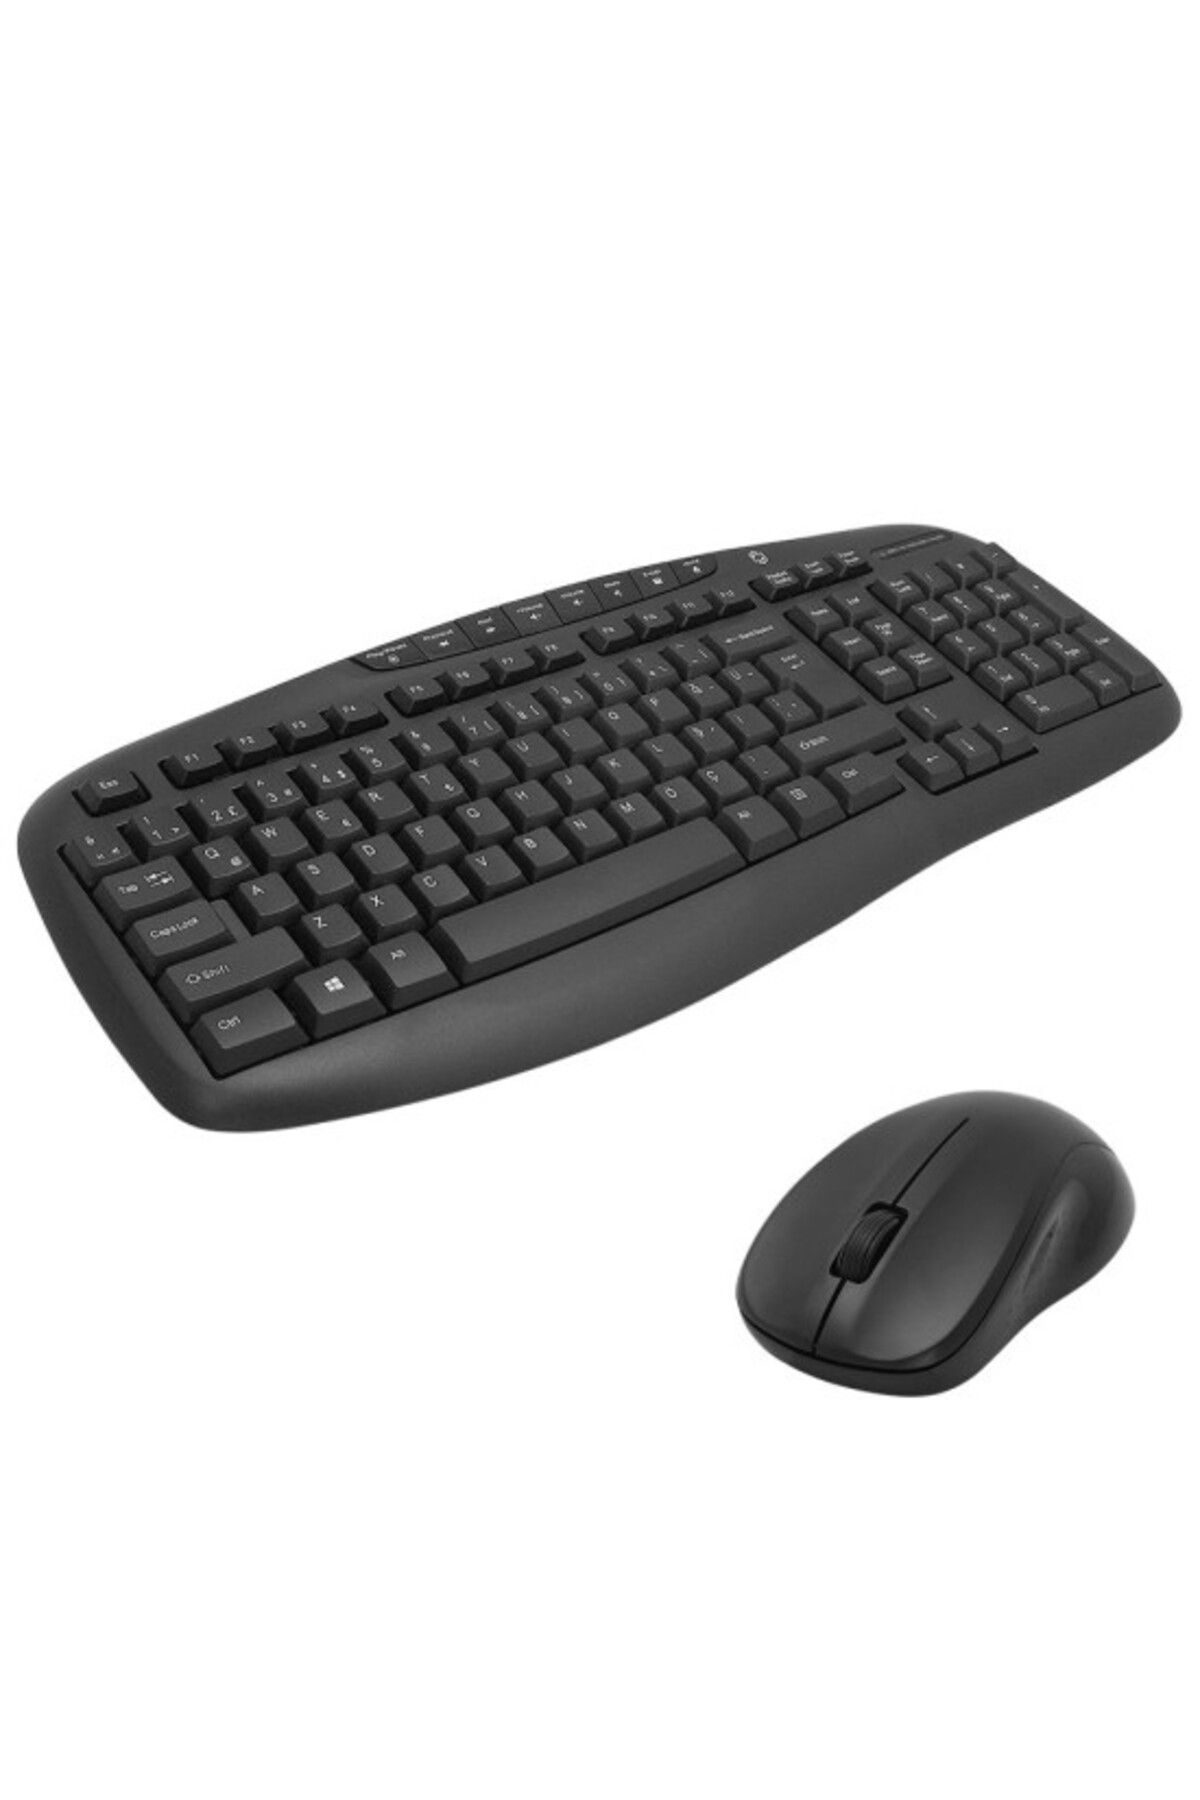 Frisby Fk-4830wq Kablosuz Q Trk Optic Mouse Siyah Multimedya Klavye - Mouse Set